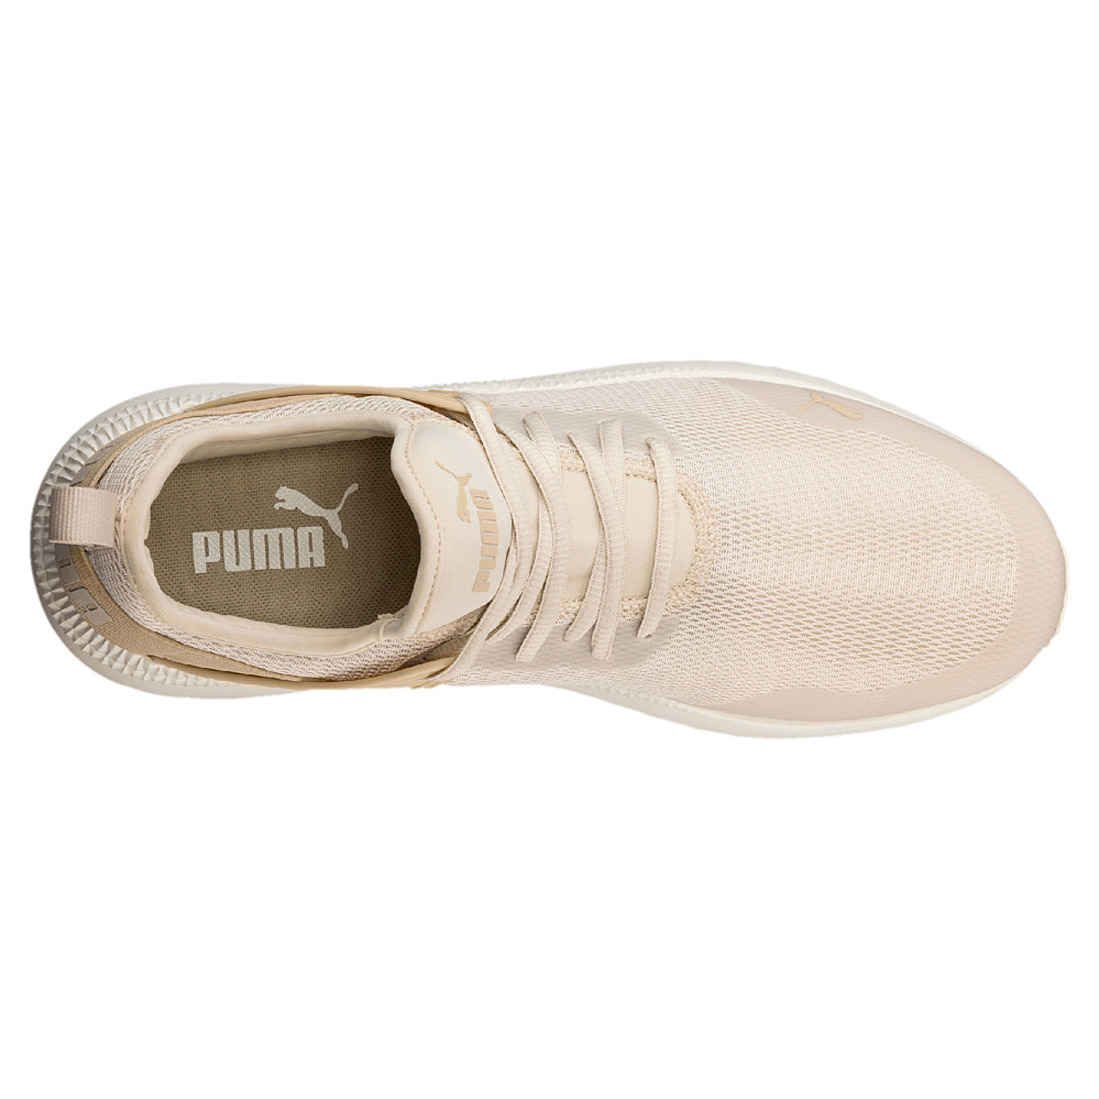 Puma Pacer Next Cage Herren Sneaker Schuhe 365284 02 Birch-Pebble